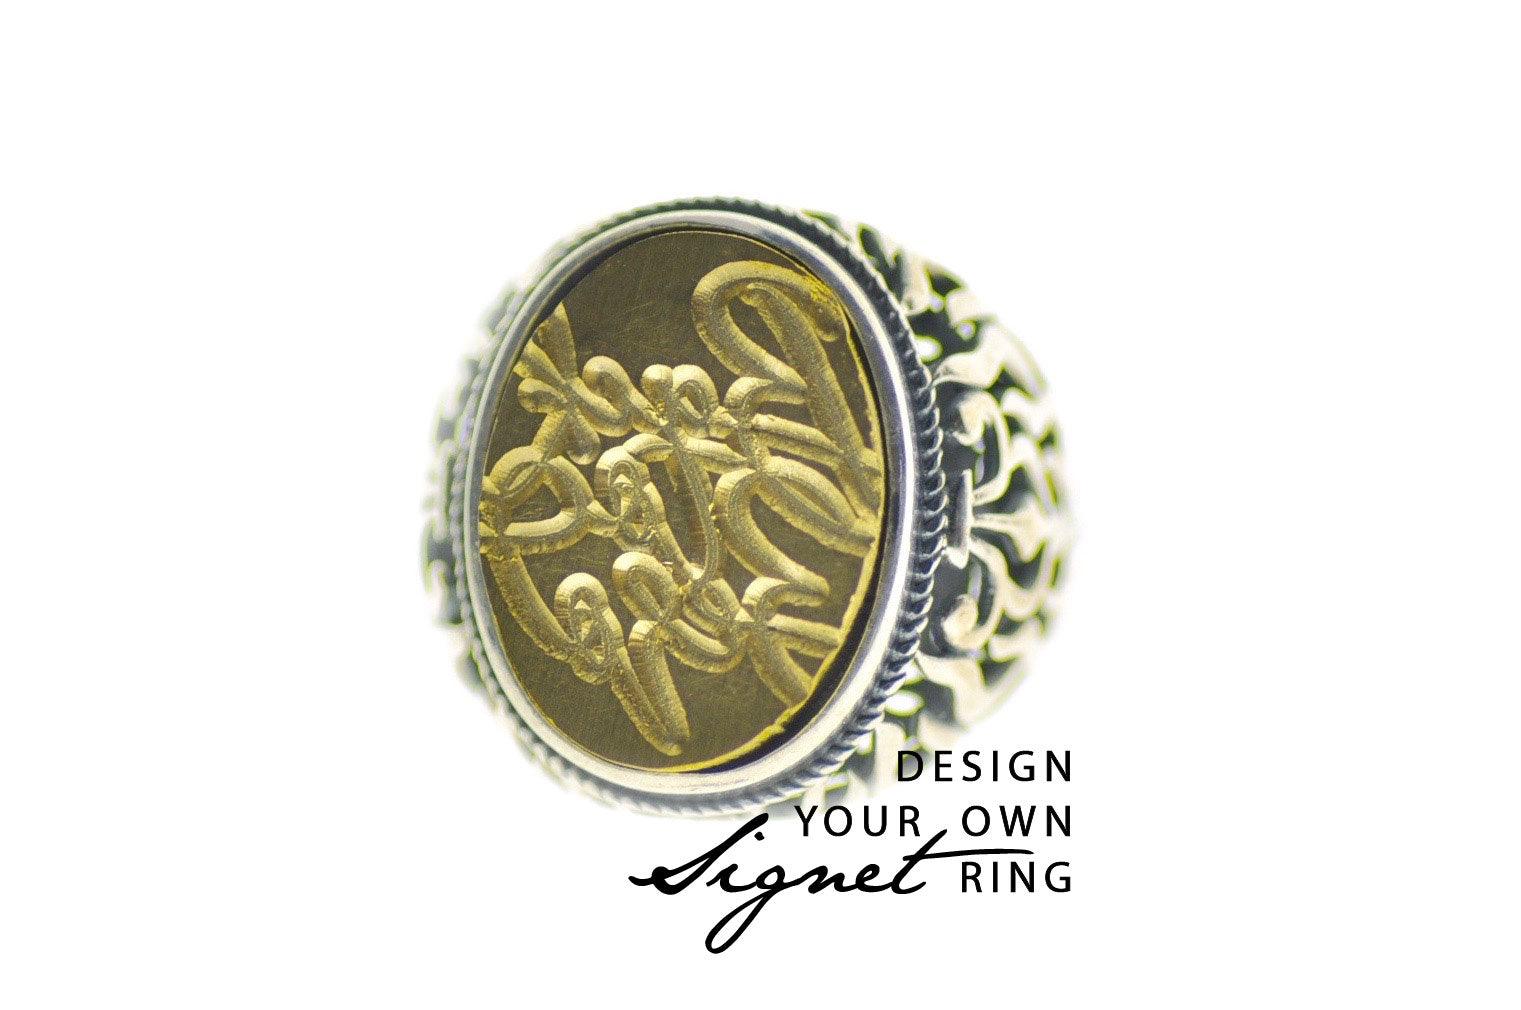 Design your own 15x20mm Flame Signet Ring - Backtozero B20 - 1520f, 15x20mm, 15x20mm ring, bespoke, Custom, customsignet, Design Your Own, flame, him, logo, oval, oval ring, ring, signet ring, size 10, size 11, size 8, size 9, wax seal